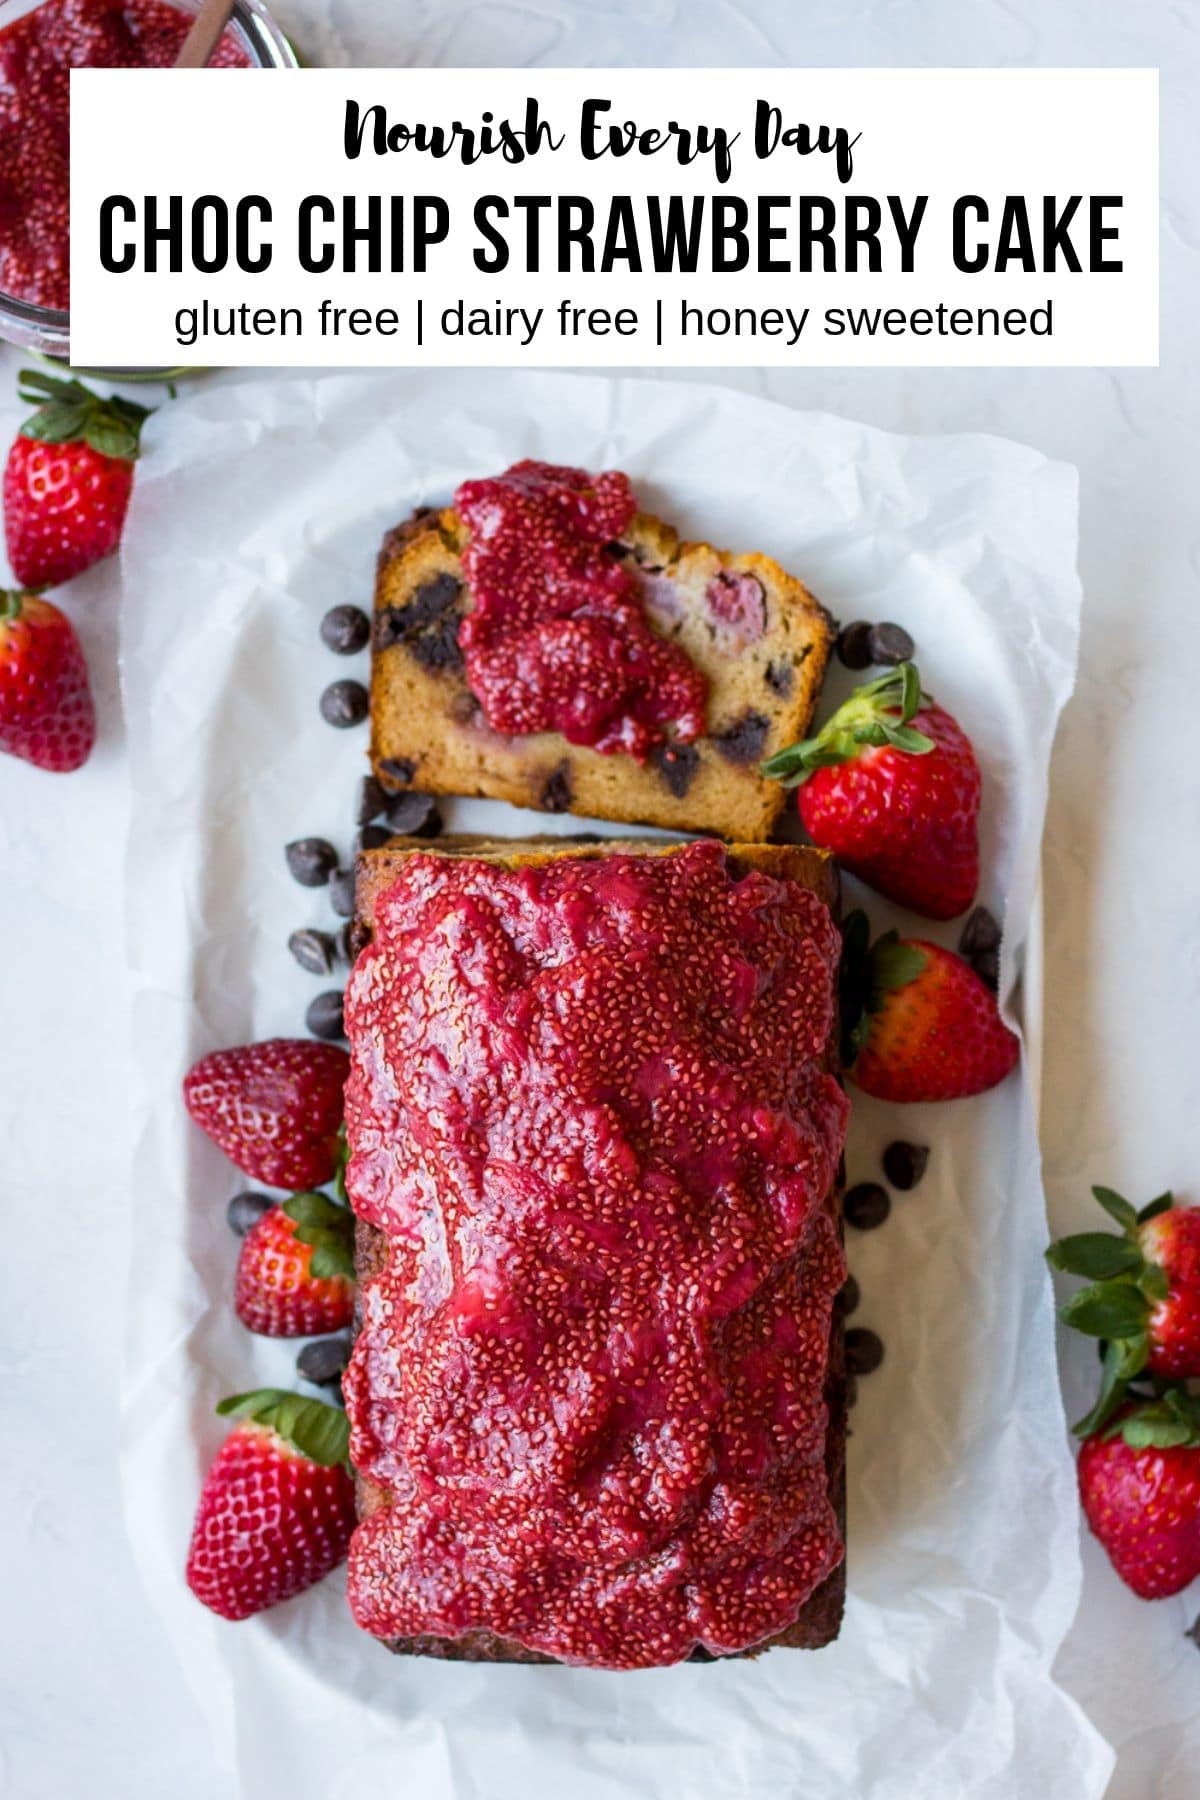 Gluten free Choc Chip Strawberry Cake Recipe on Nourish Every Day Blog